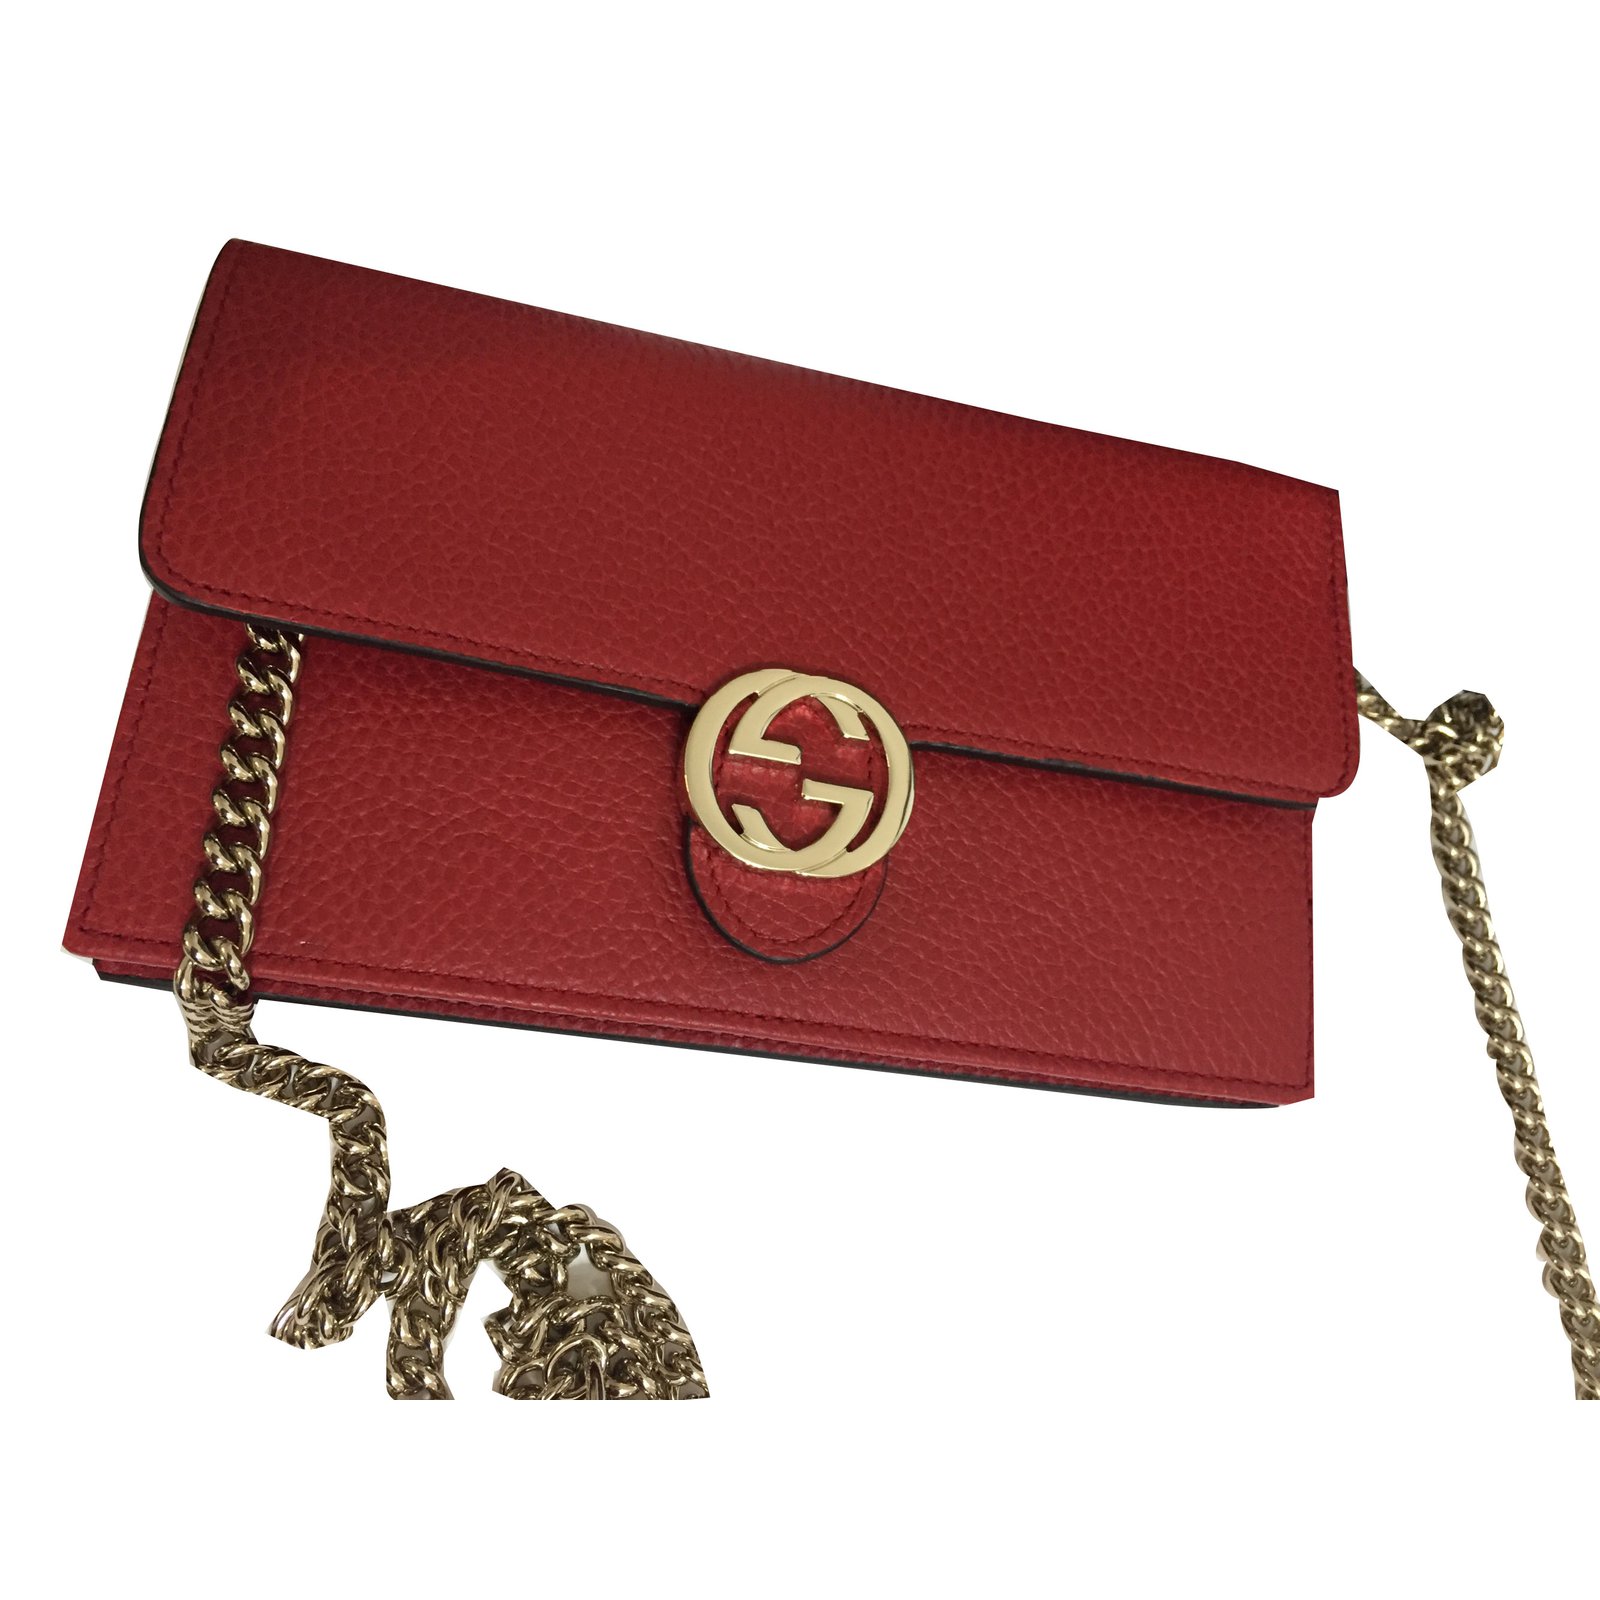 gucci wallet chain purse